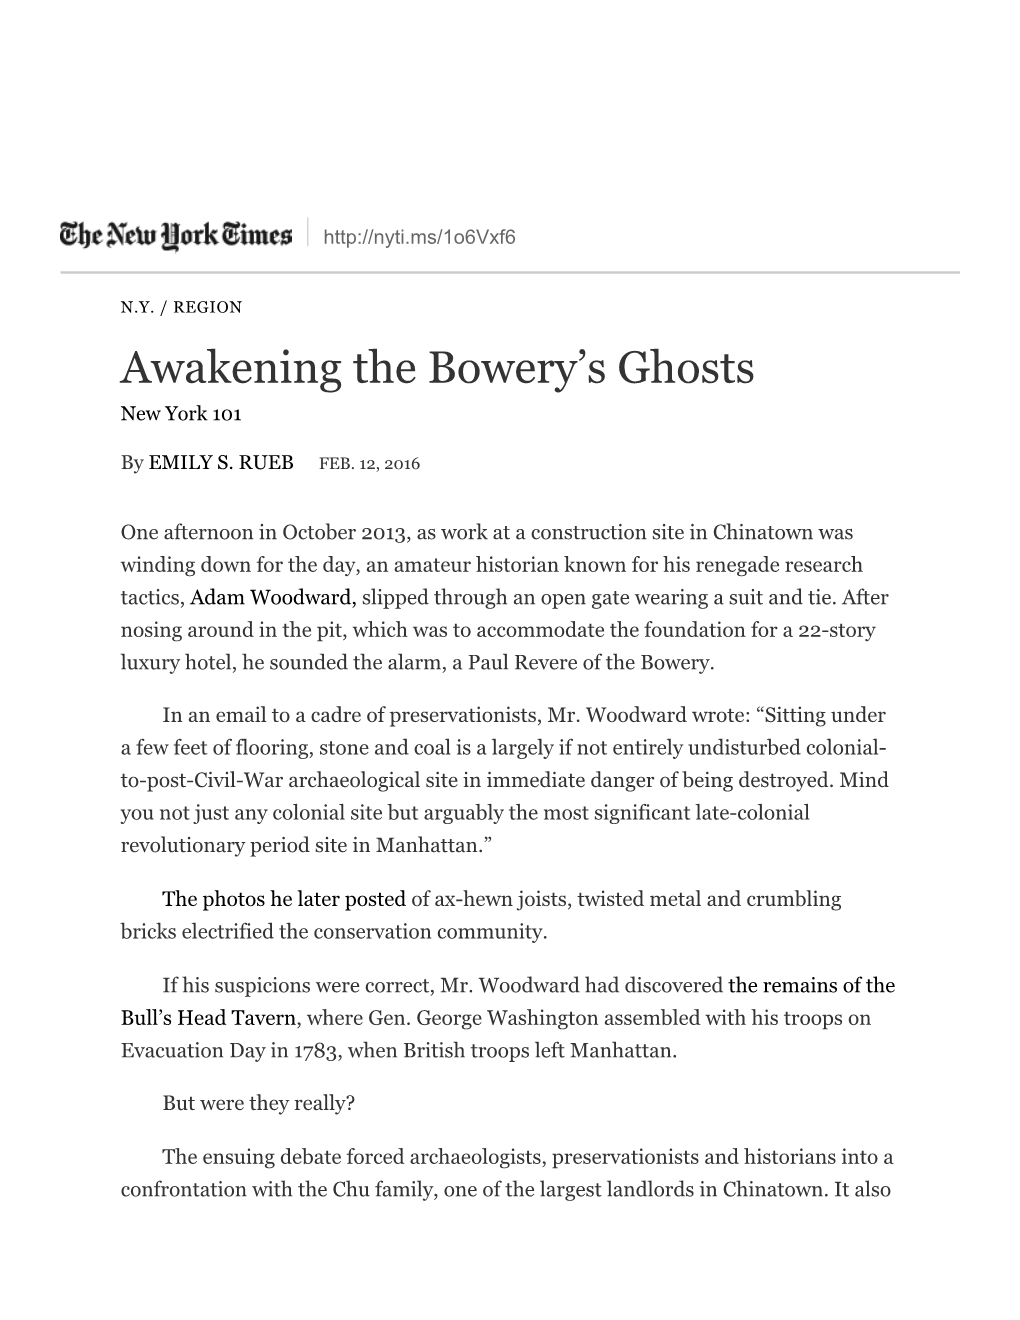 Awakening the Bowery's Ghosts